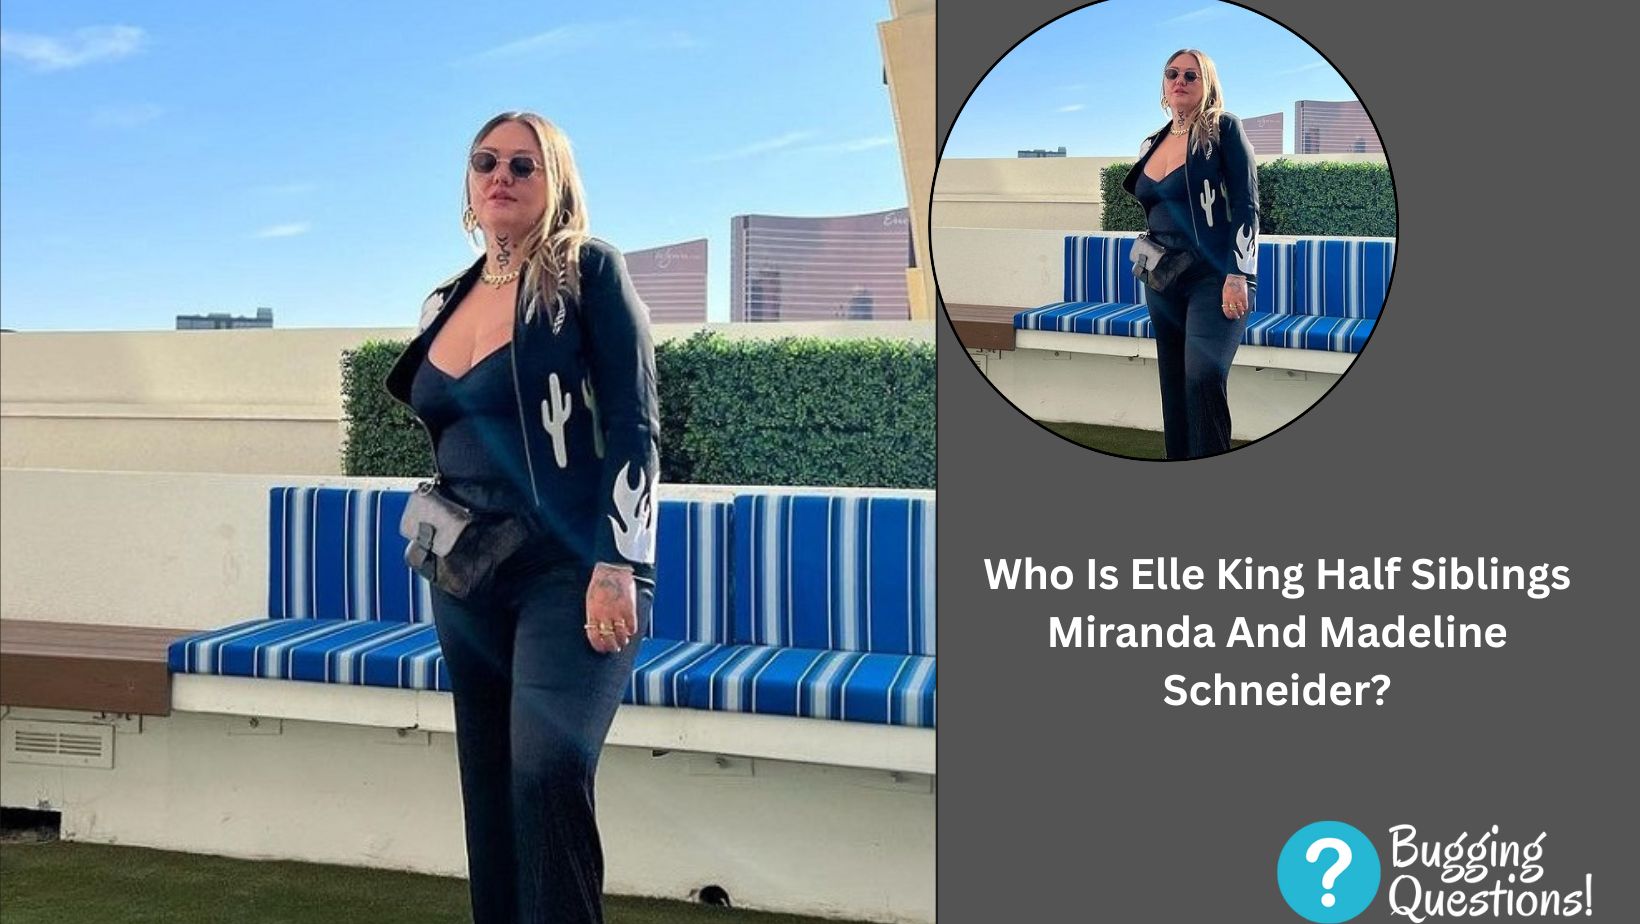 Who Is Elle King Half Siblings Miranda And Madeline Schneider?